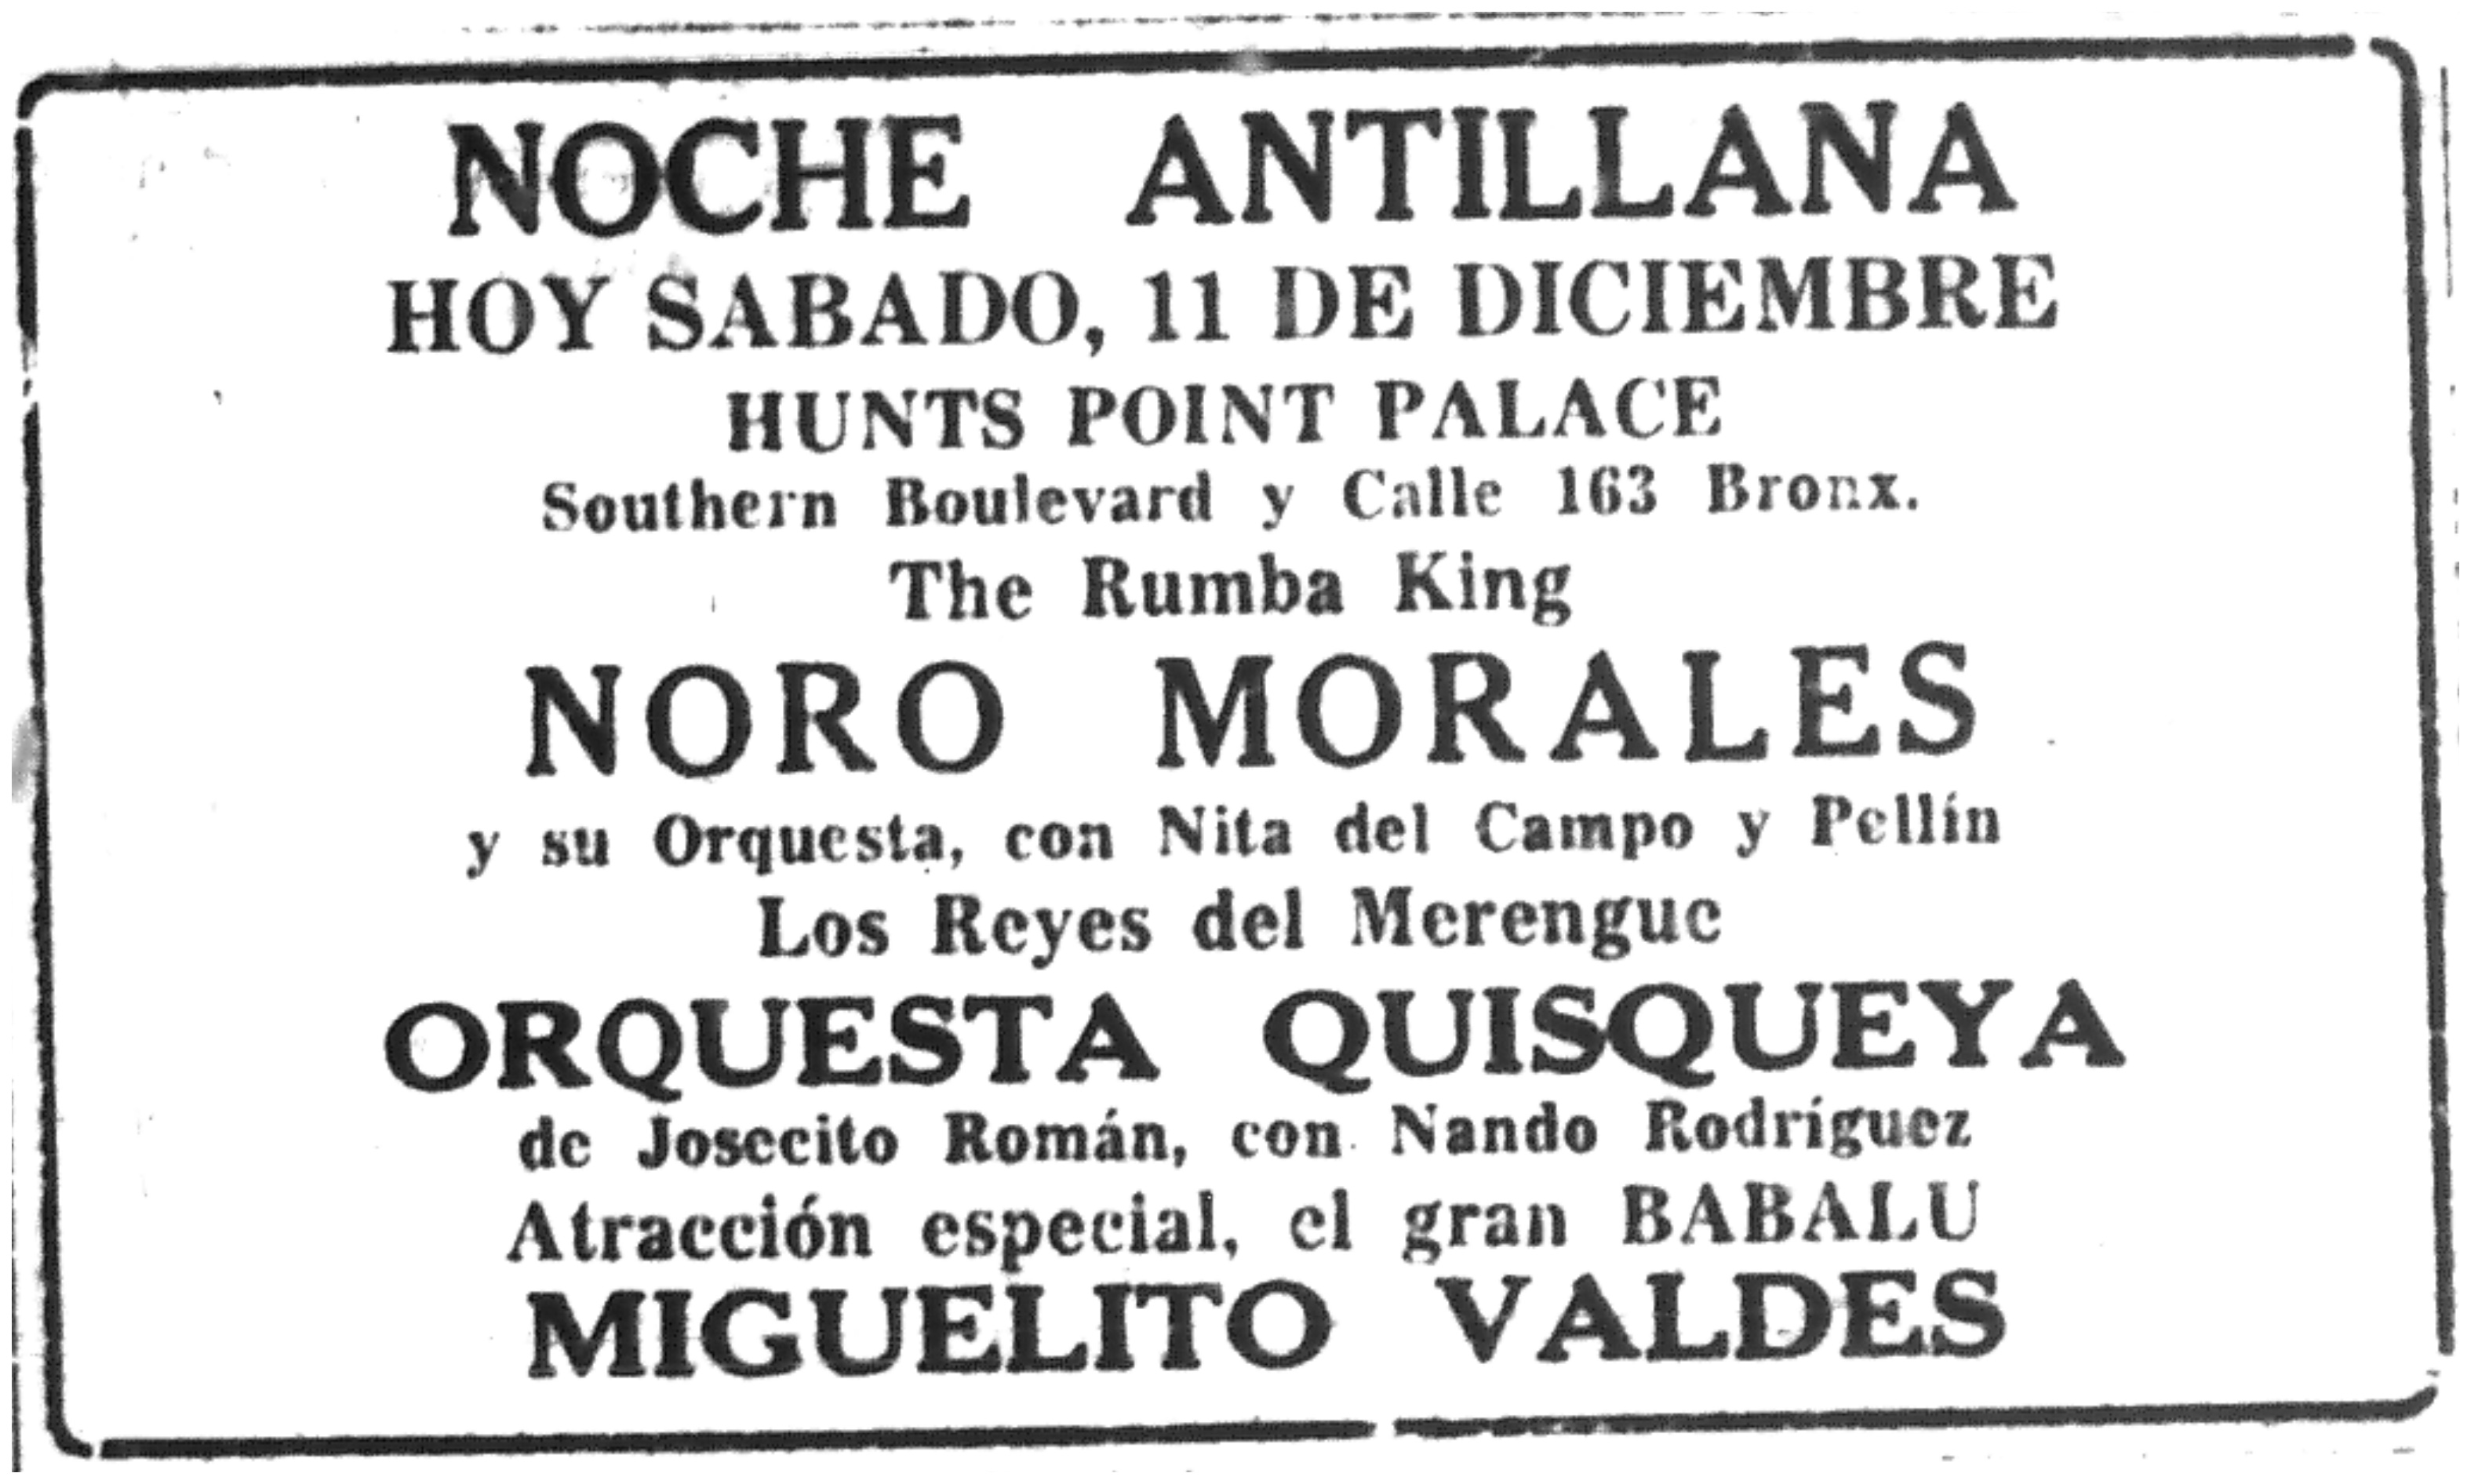 Noche Antillana Event Advertisement, December 11, 1948